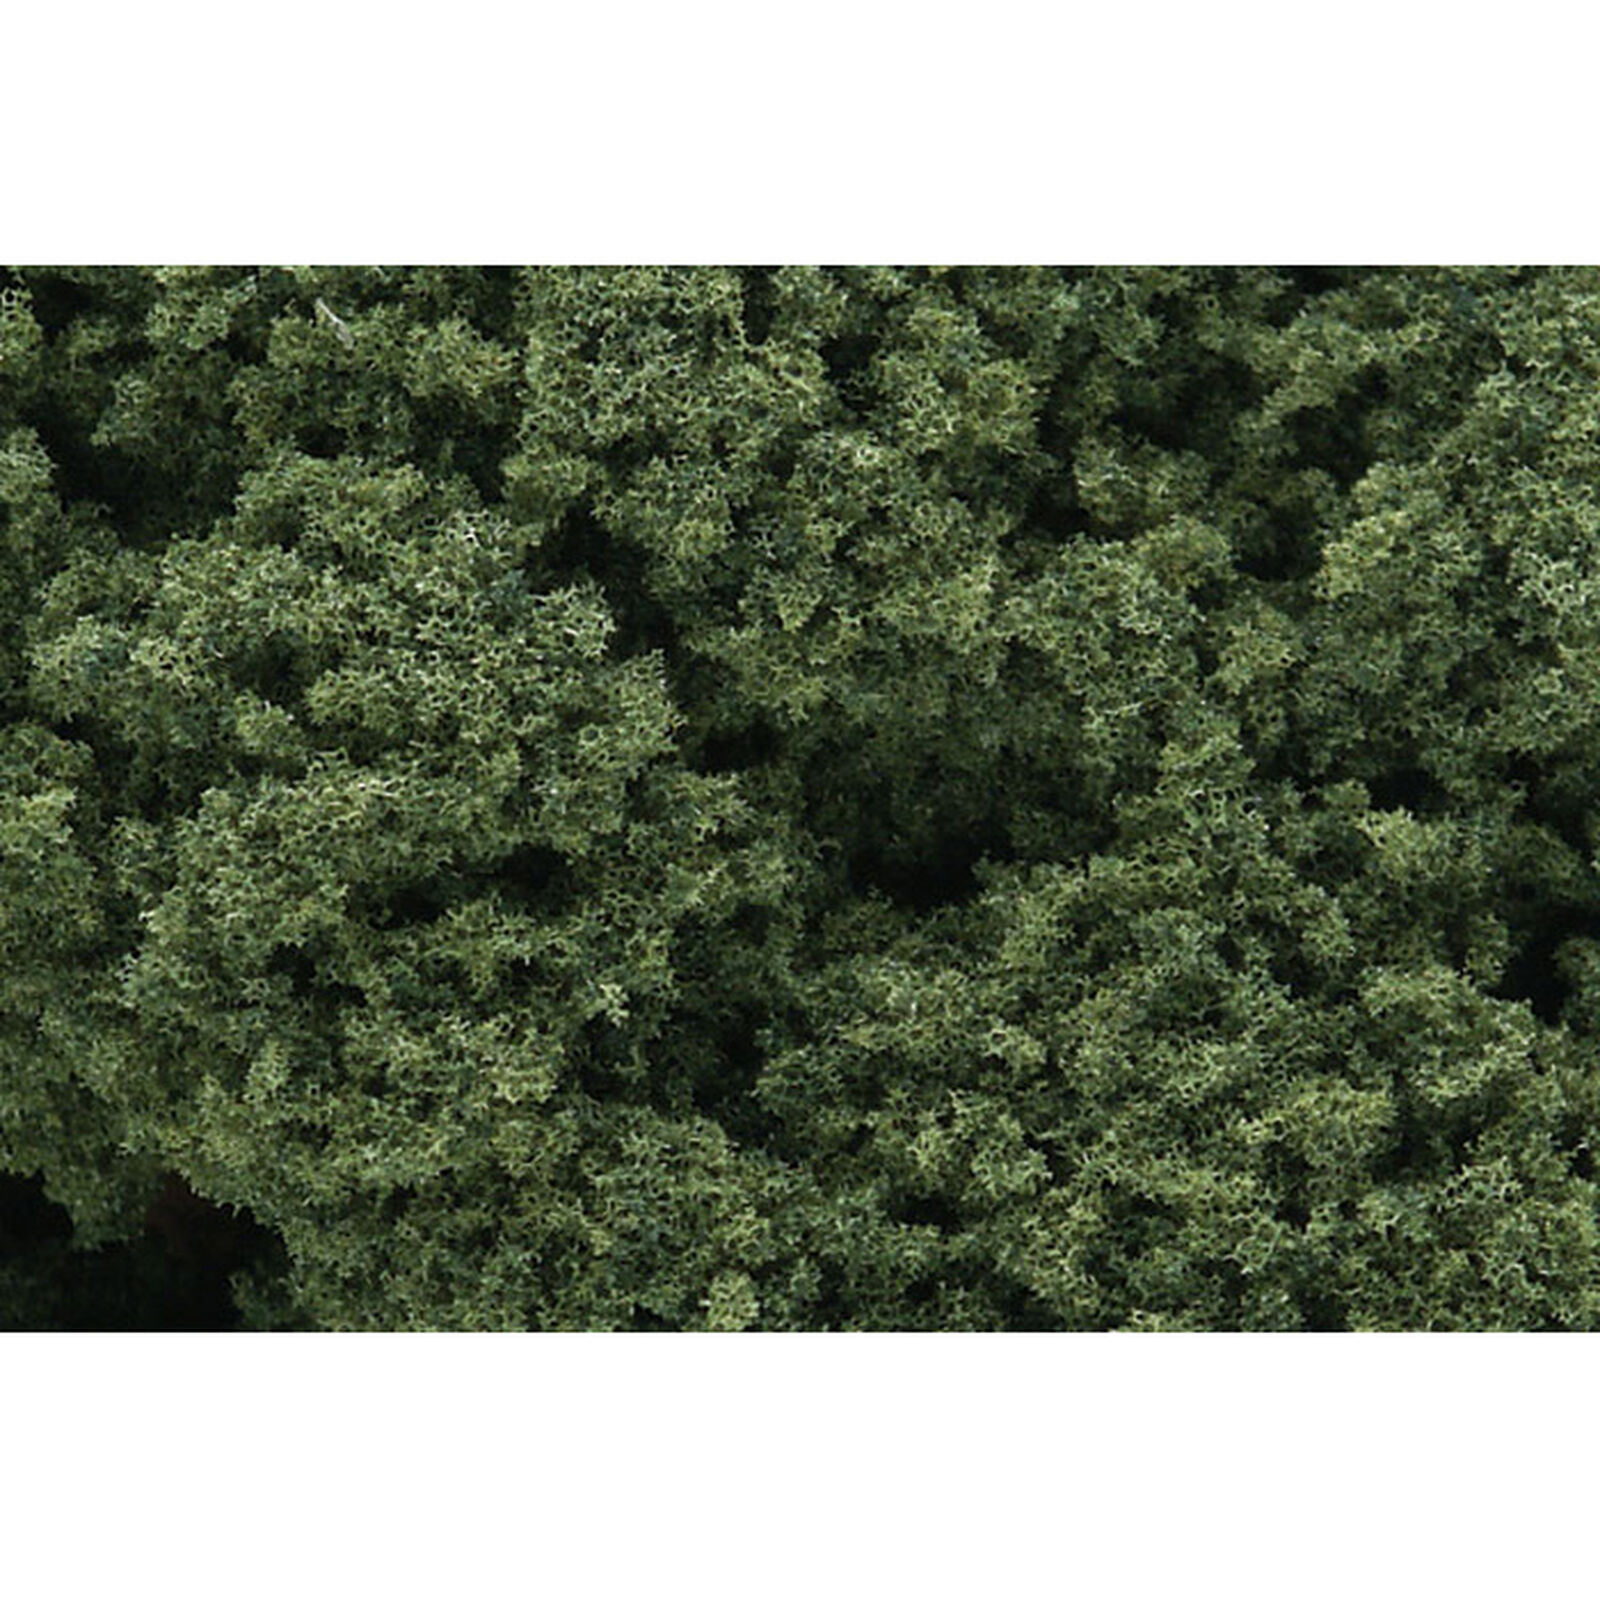 Foliage Cluster Bag, Medium Green/45 cu. in.